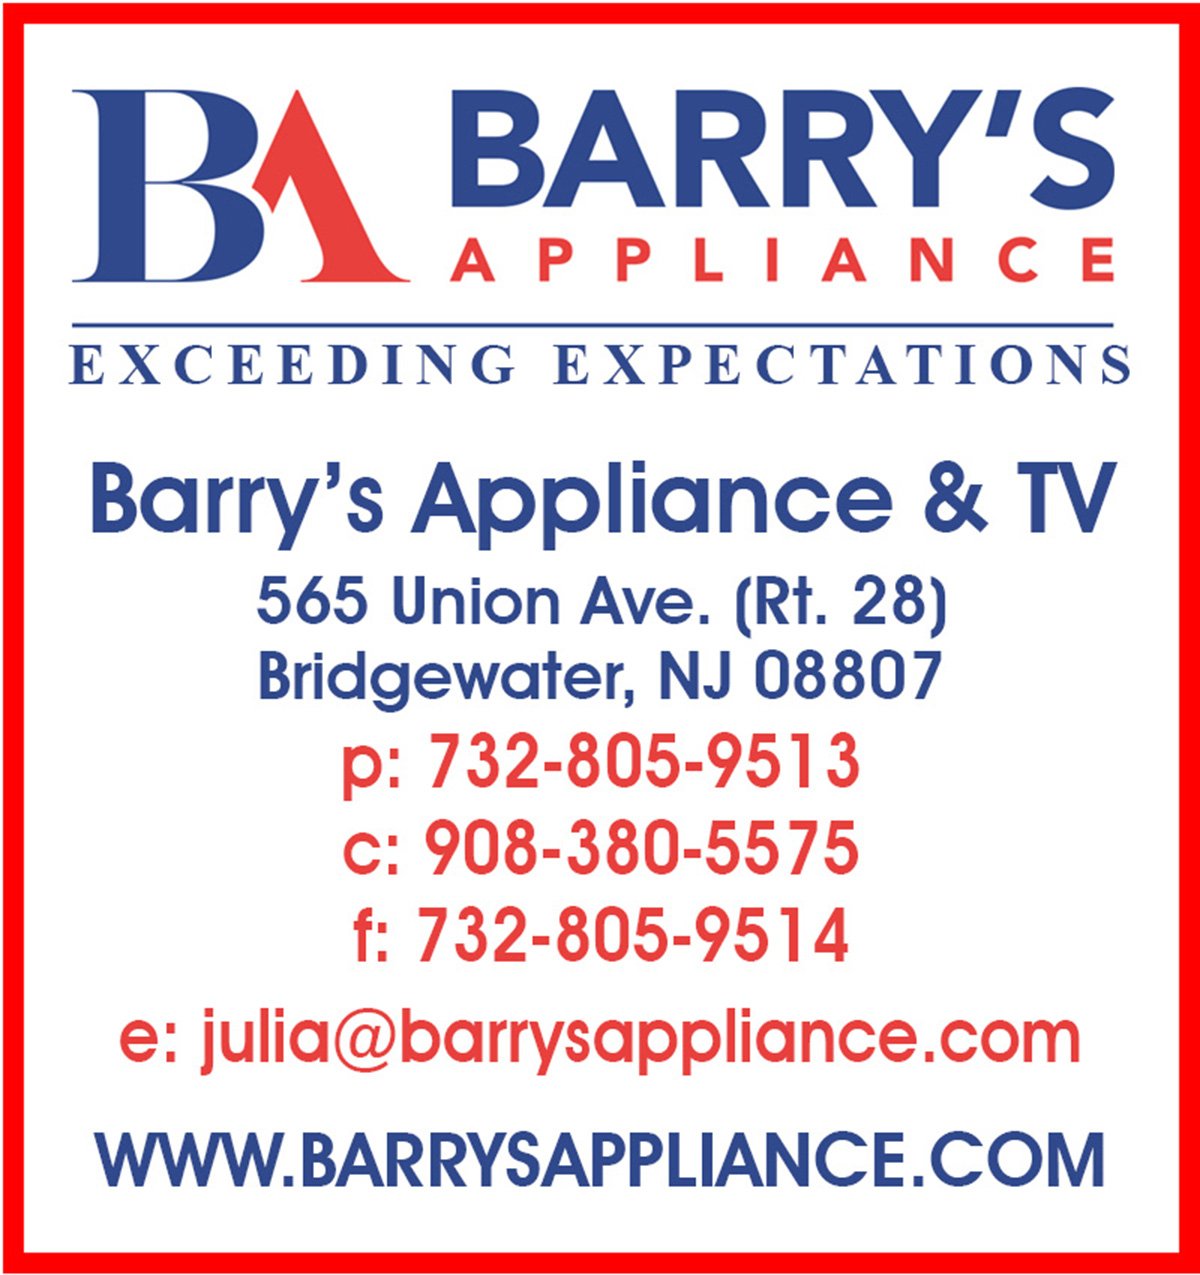 Barry's Appliance